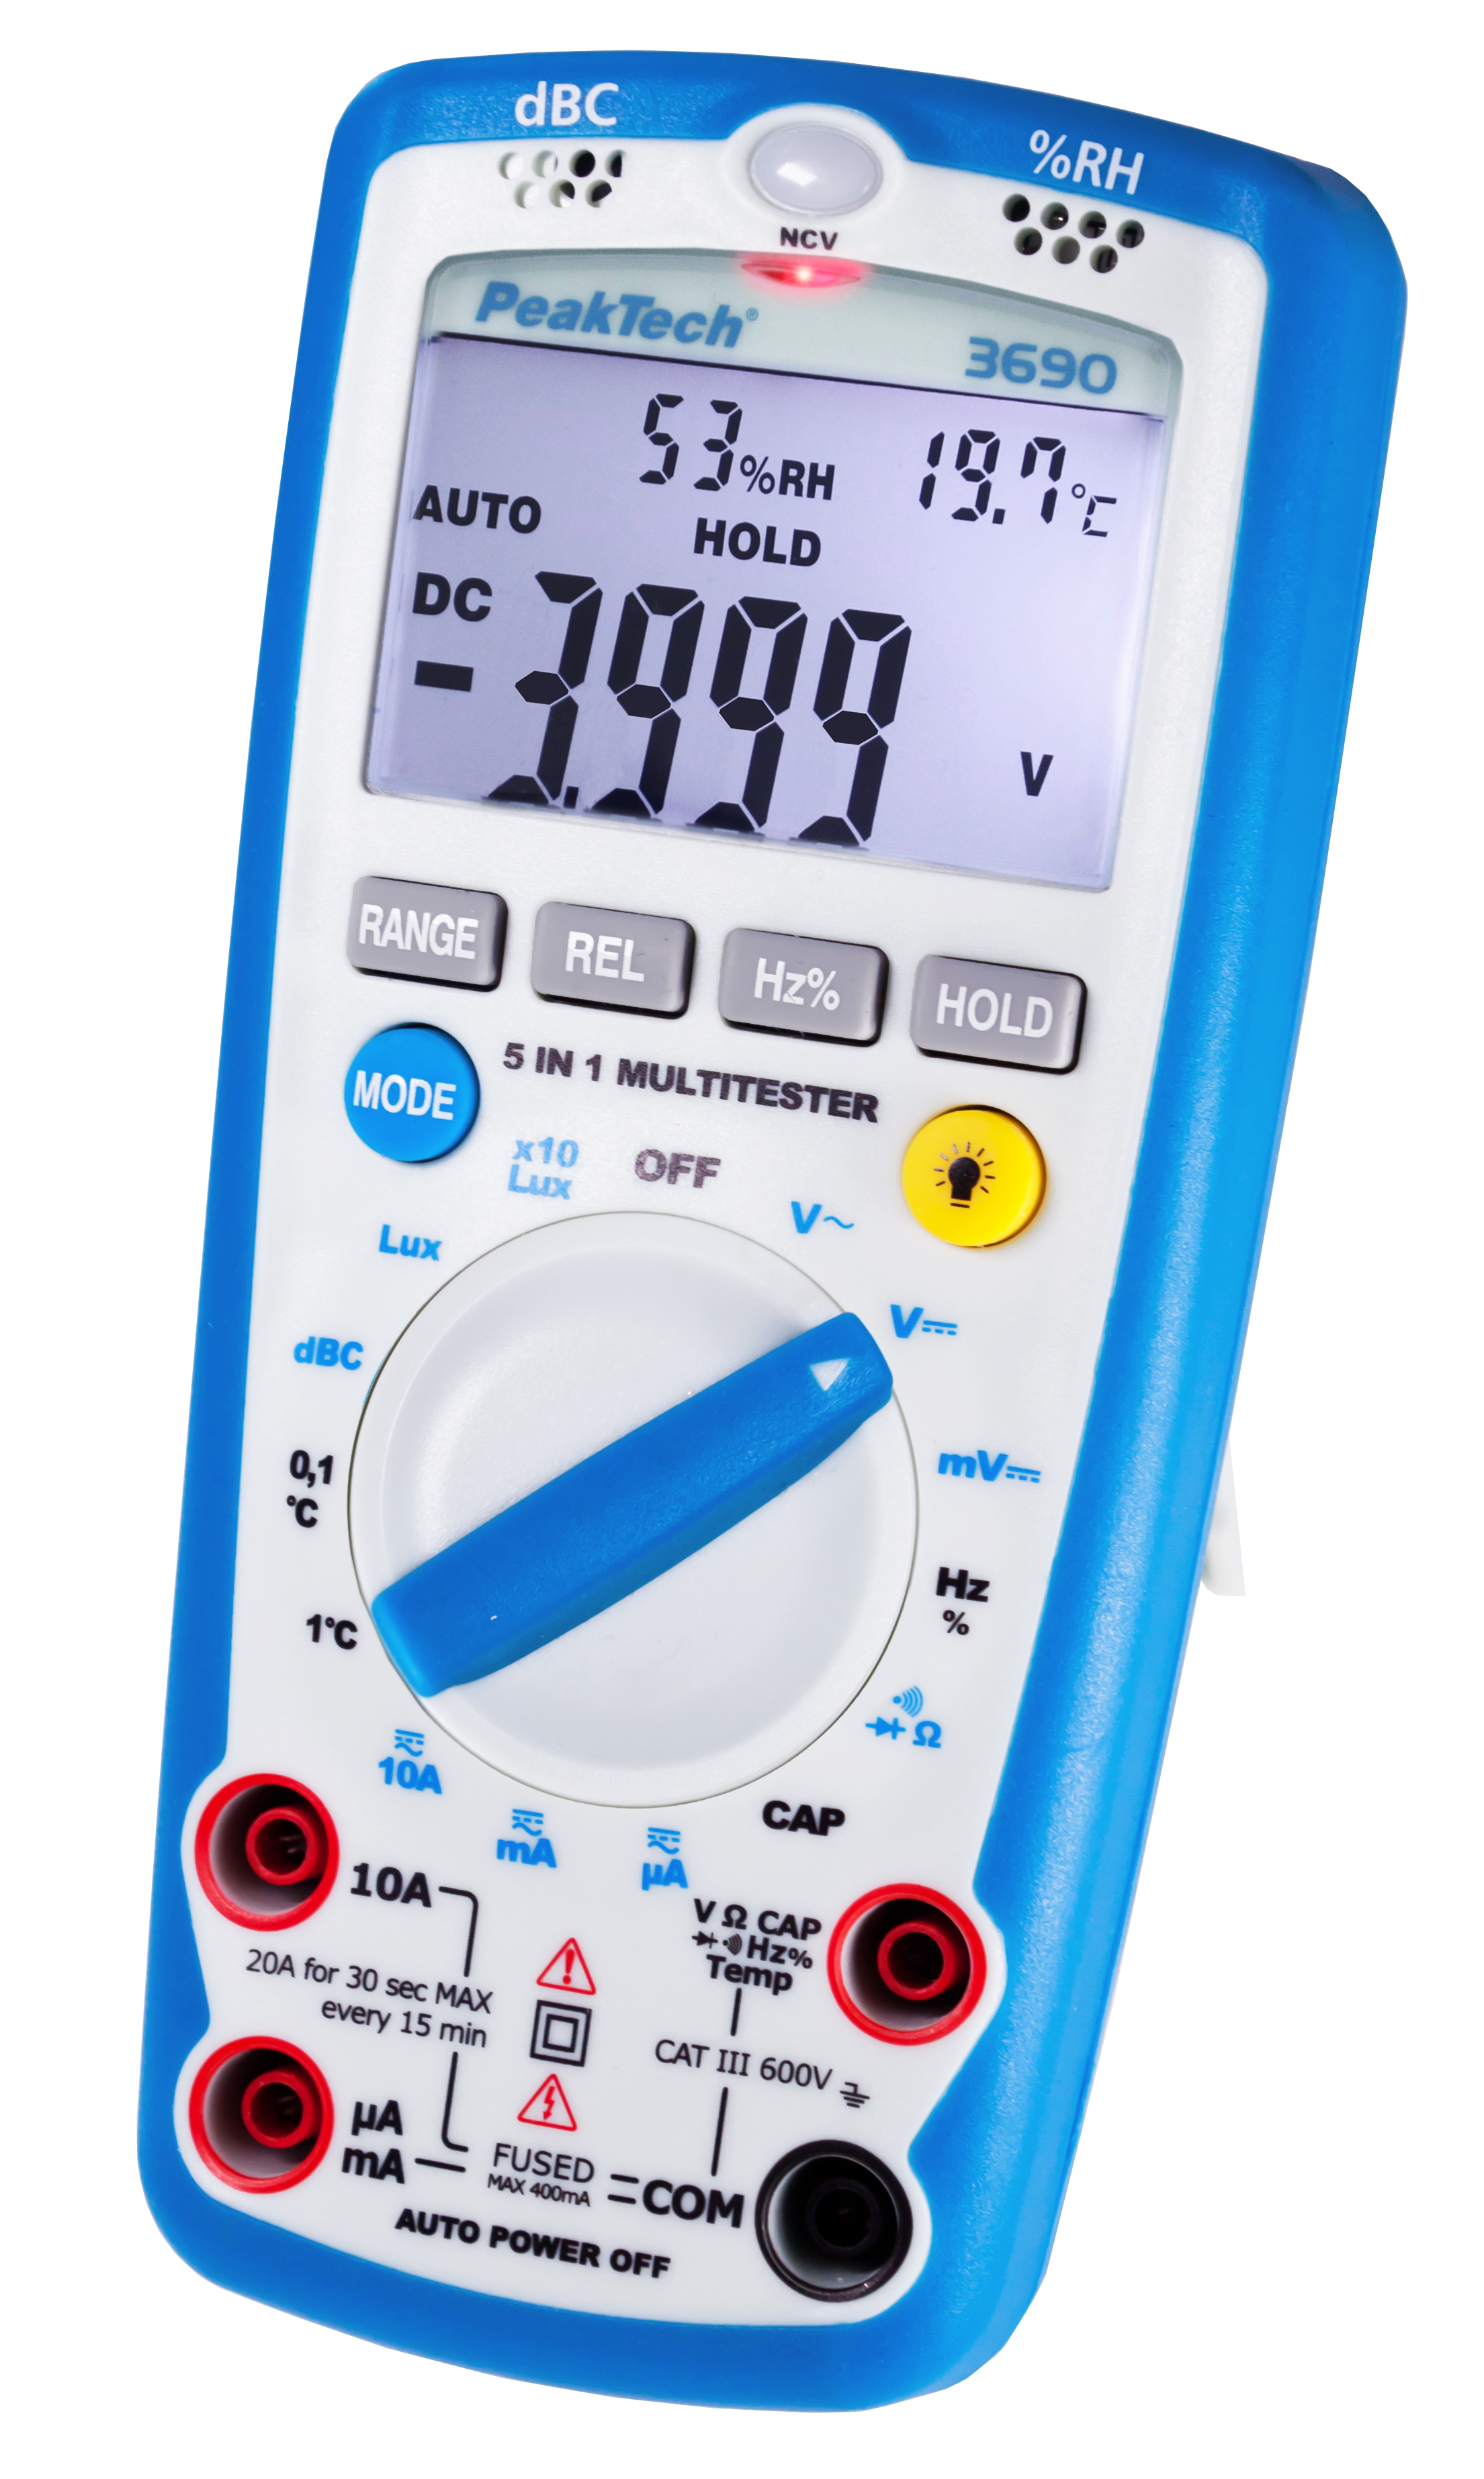 «PeakTech® P 3690» 4000 counts multimeter, environmental measurements